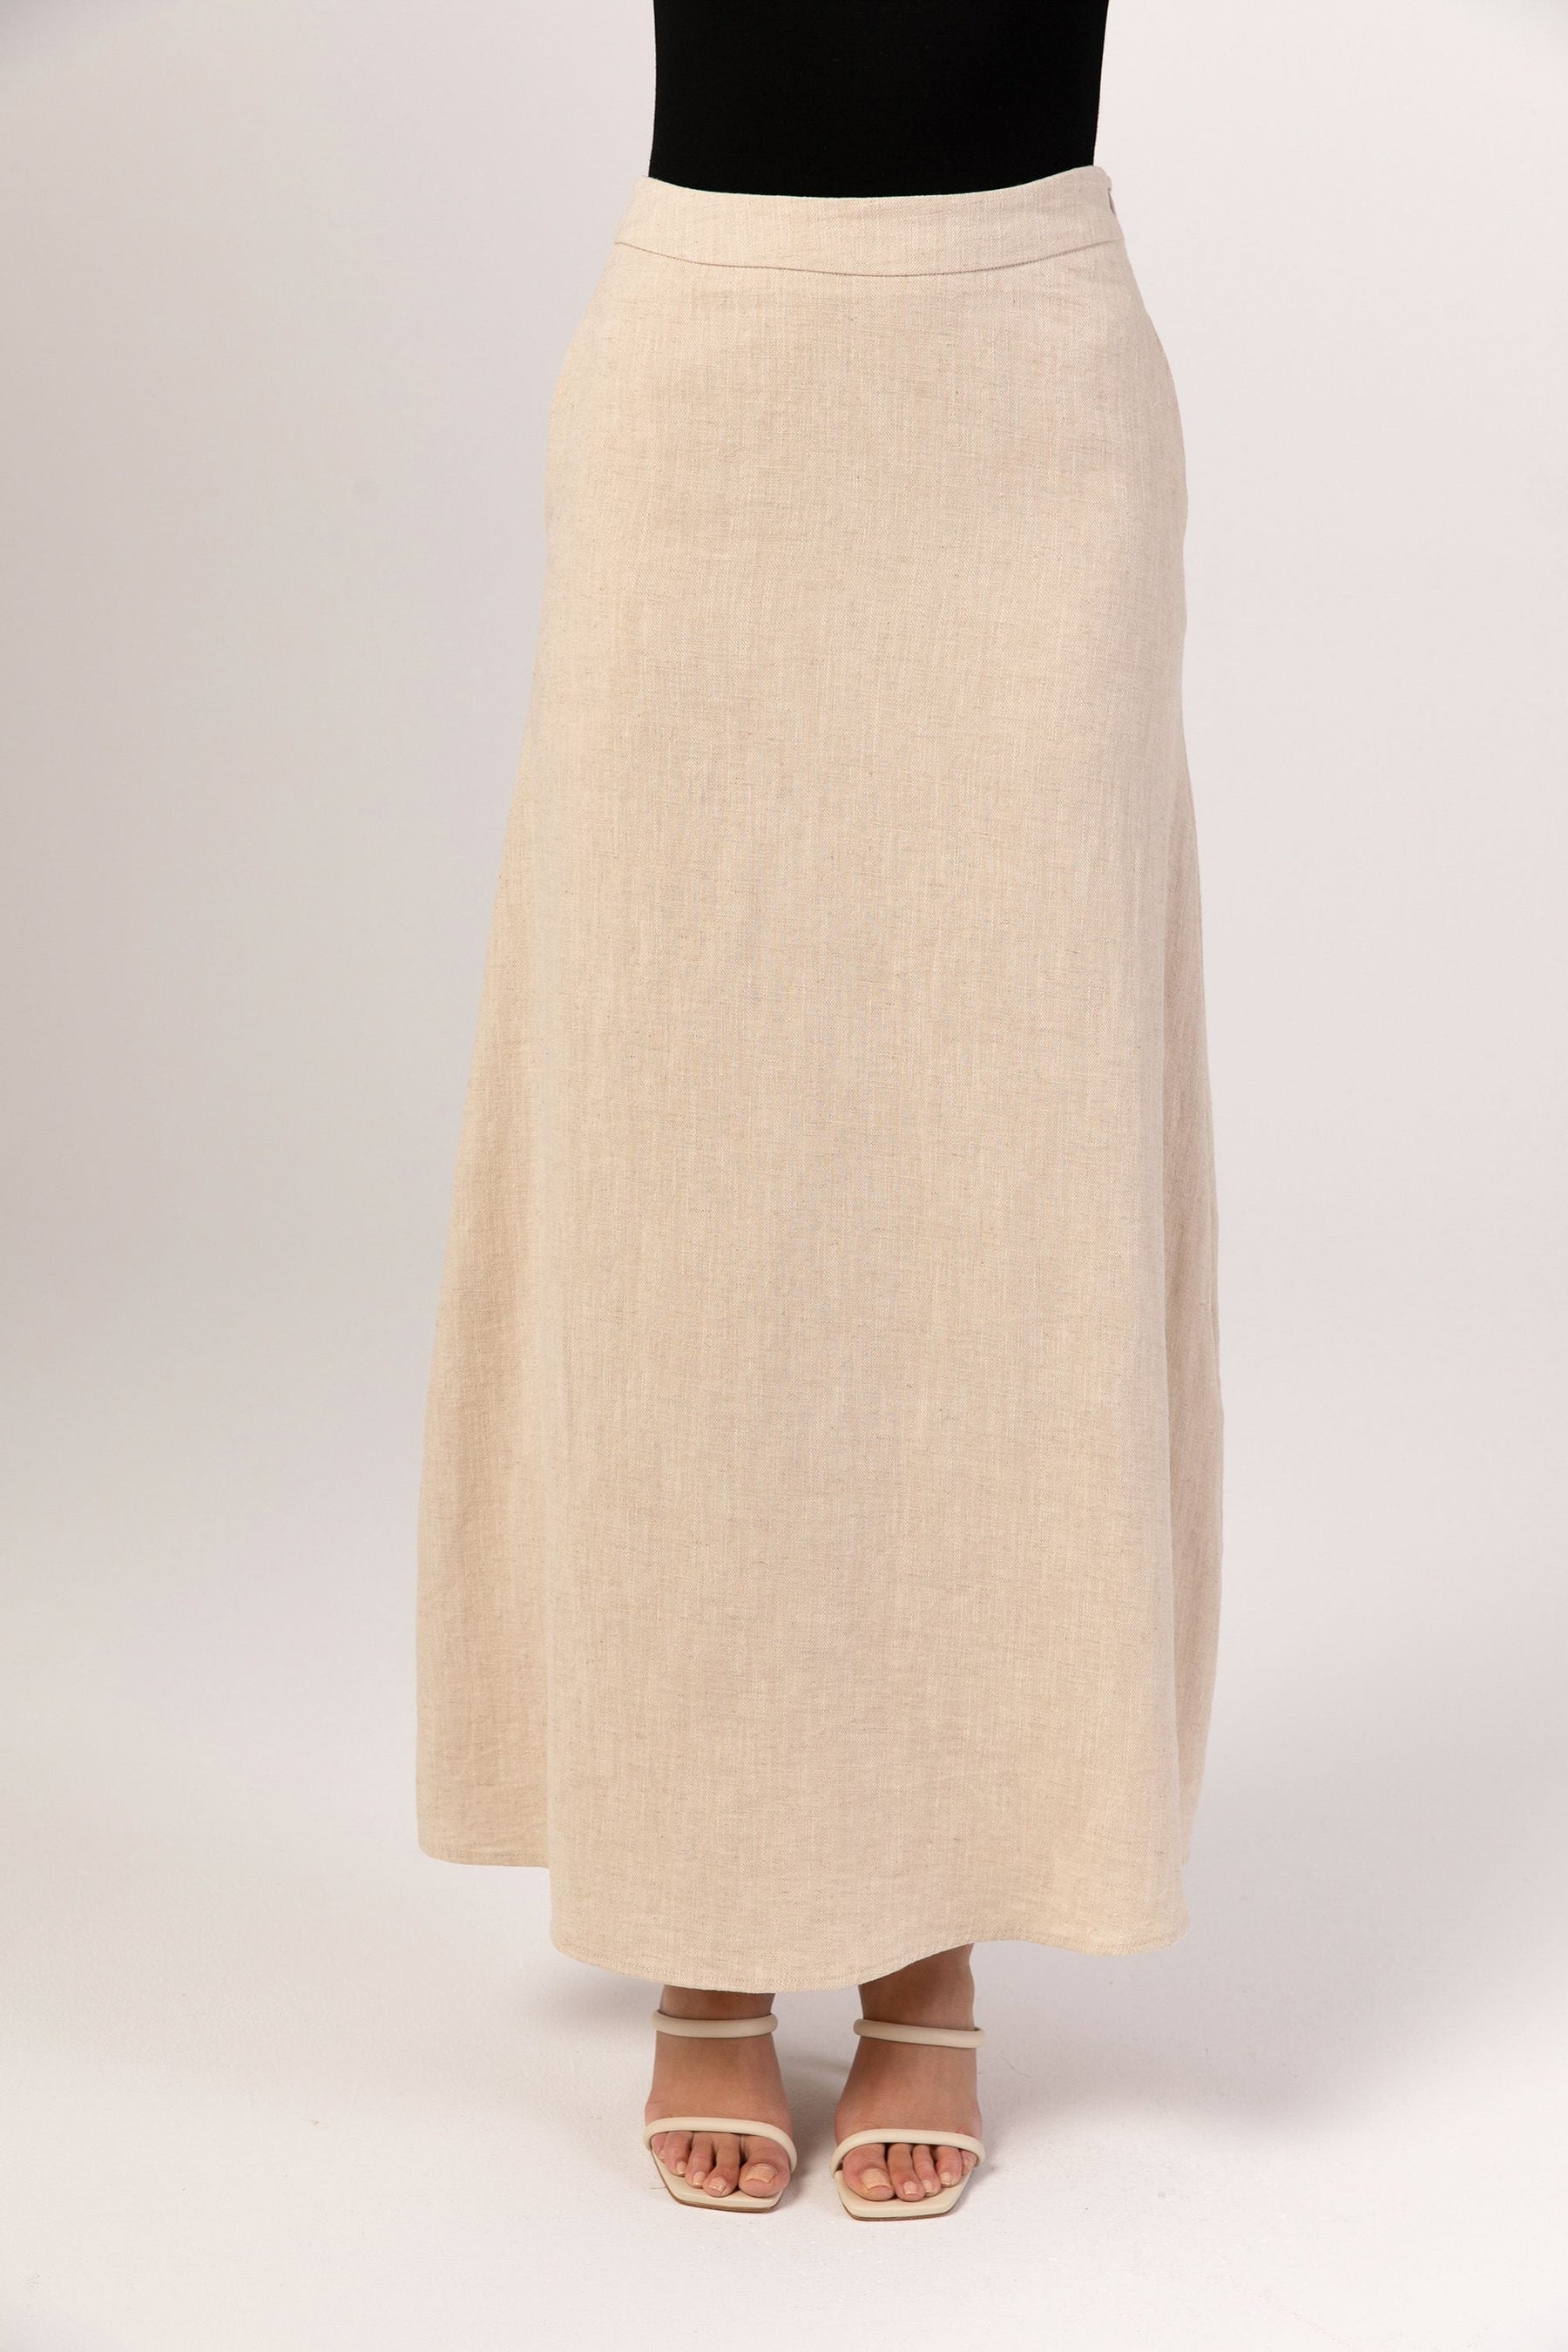 Lubna Linen Maxi Skirt - Tan Veiled 